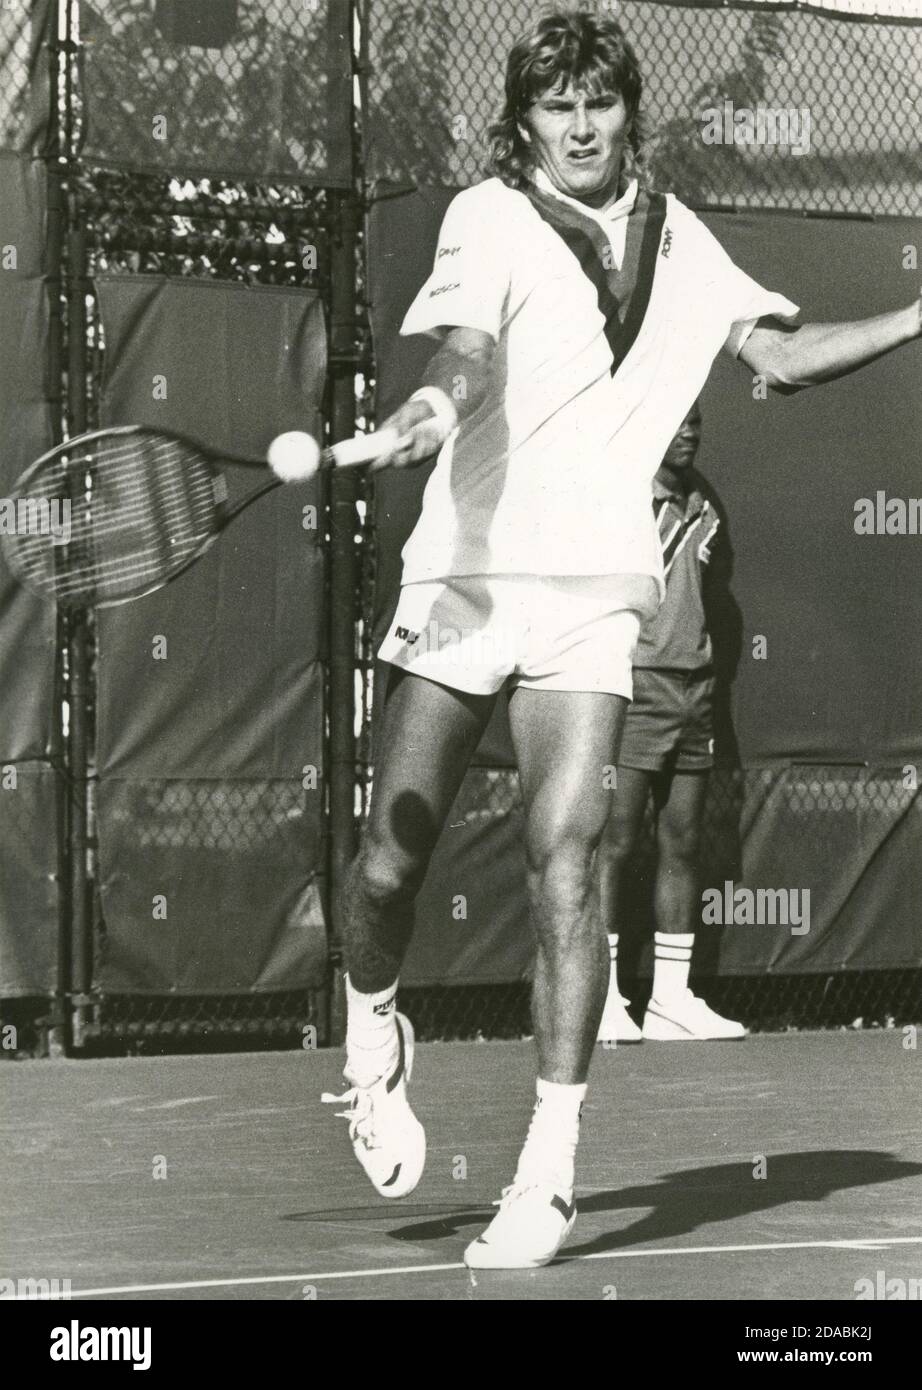 Swedish tennis player Peter Lundgren, 1980s Stock Photo - Alamy